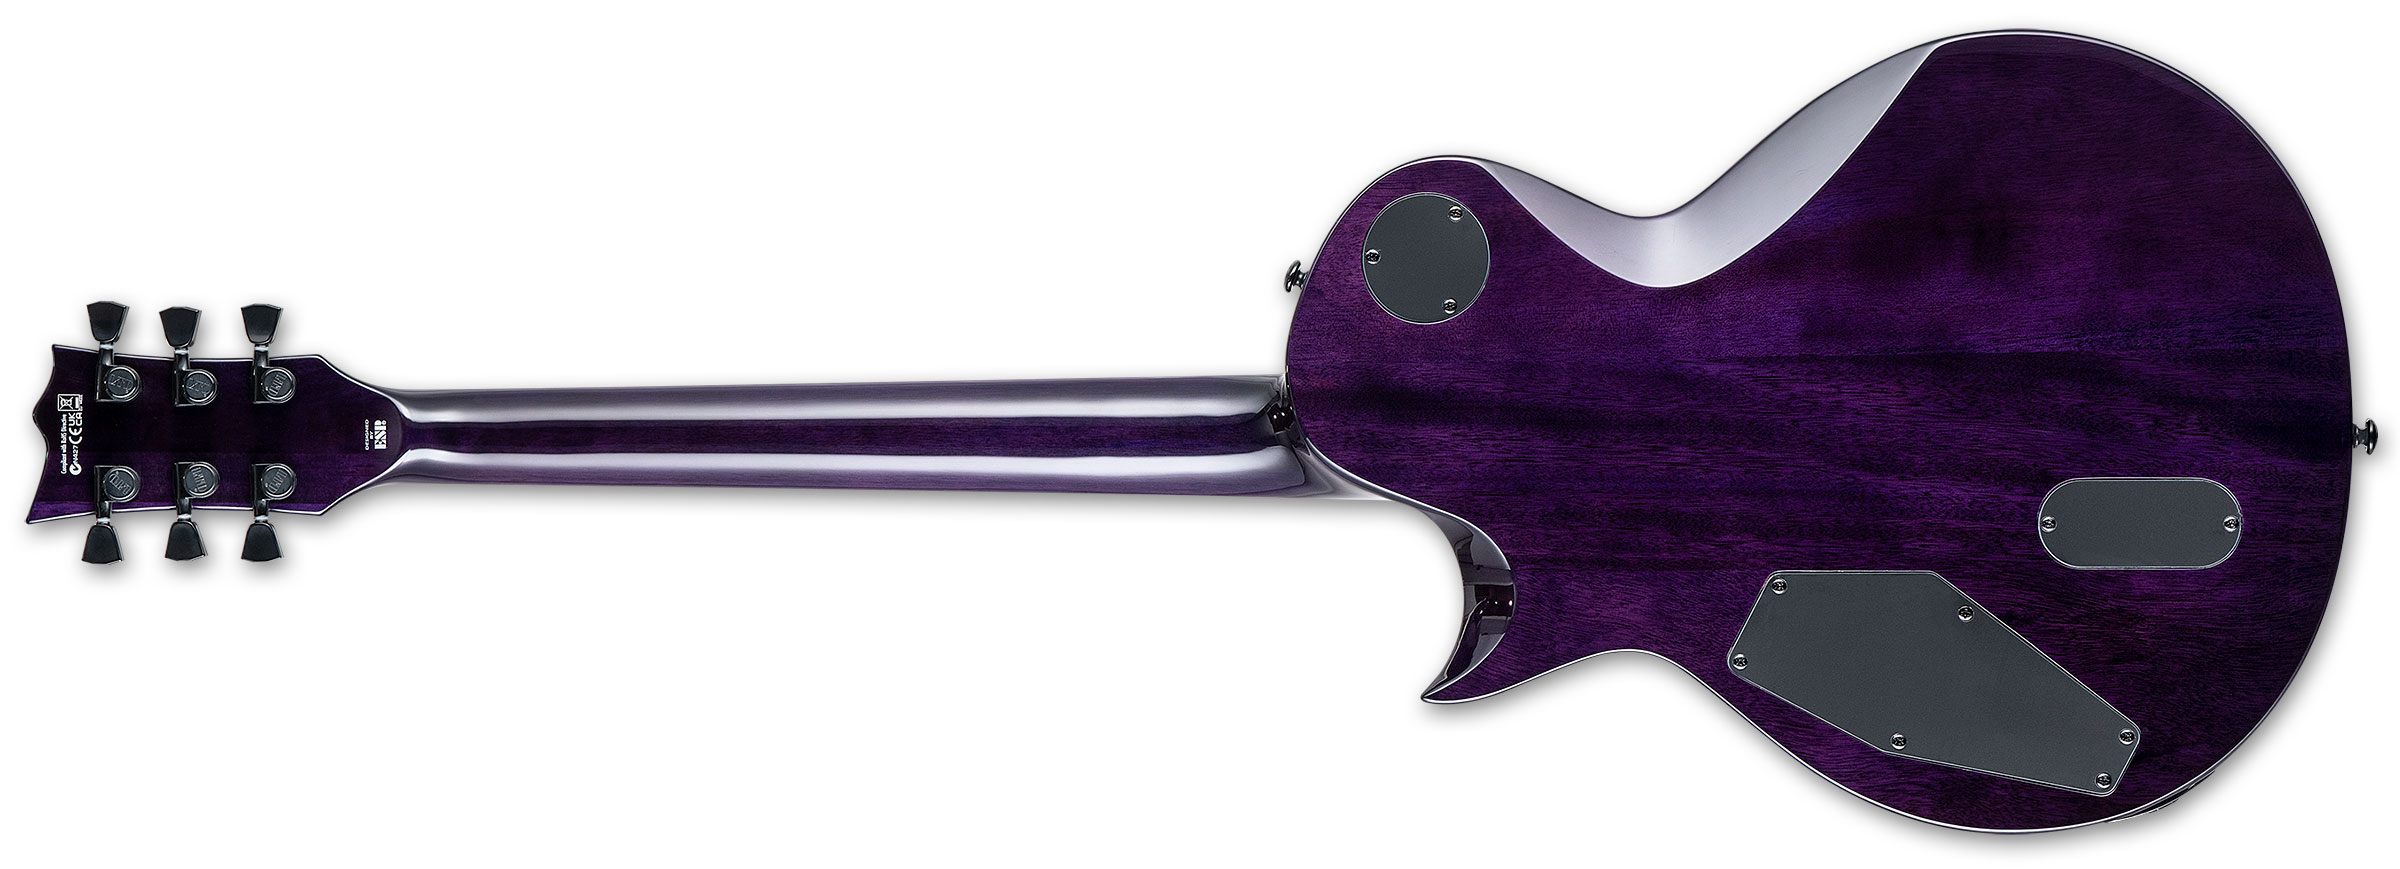 Ltd Ec-1000 Hh Ht Emg Eb - See Thru Purple Sunburst - Guitarra eléctrica de corte único. - Variation 2